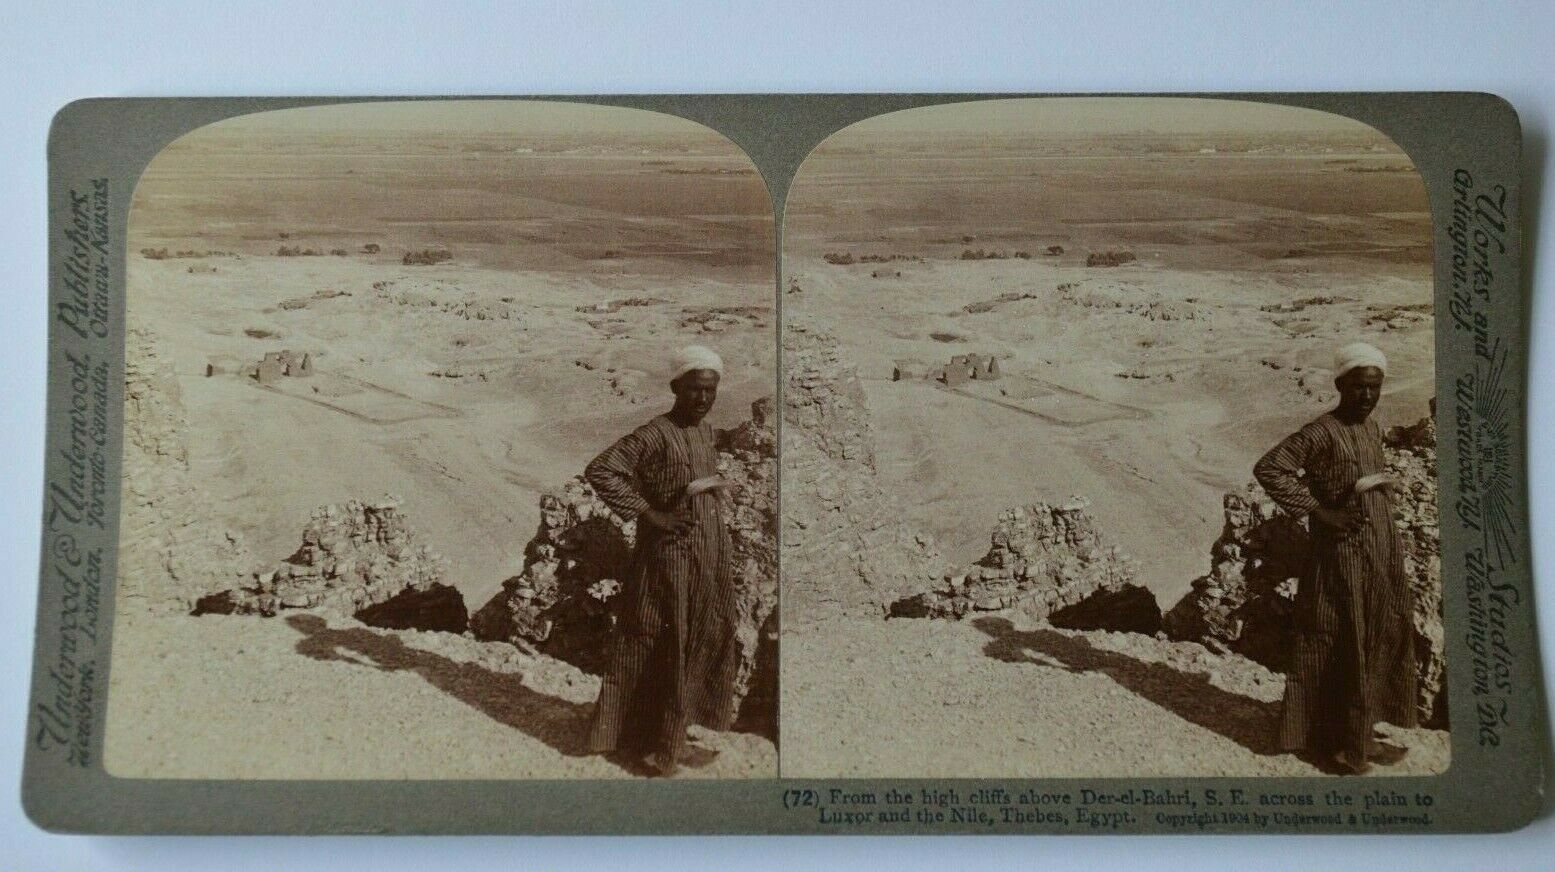  StereoView FROM THE HIGH CLIFFS ABOVE DER-EL-BAHRI, EGYPT 1904